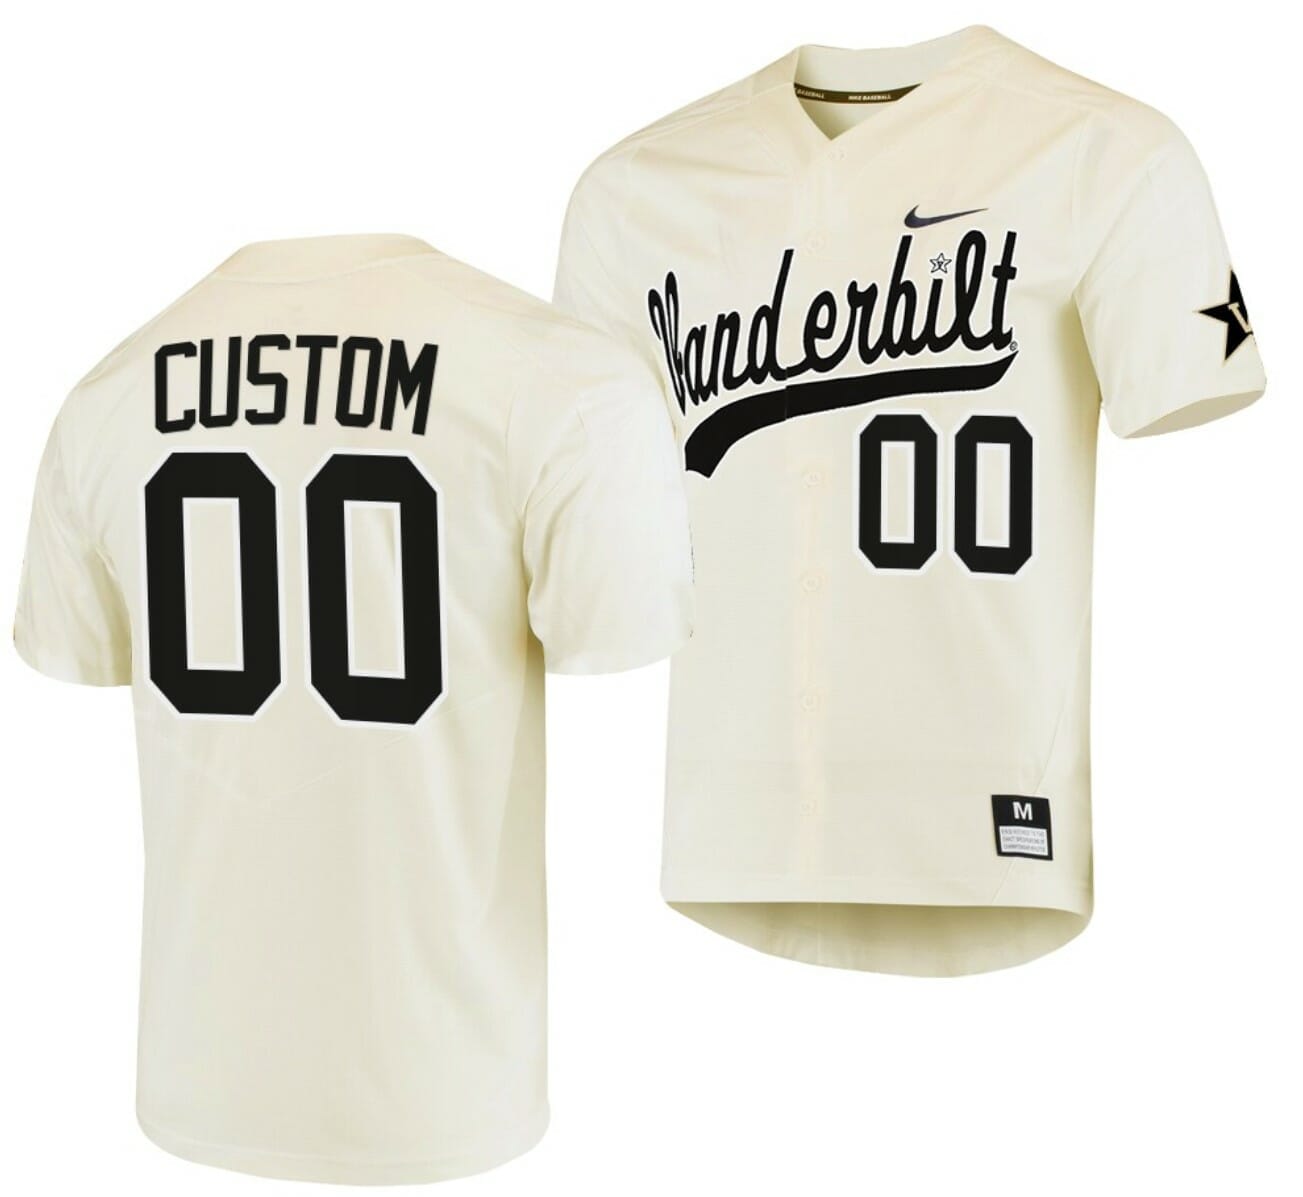 Custom NCAA Baseball Jersey Vanderbilt Commodores Name and Number College Replica Cream